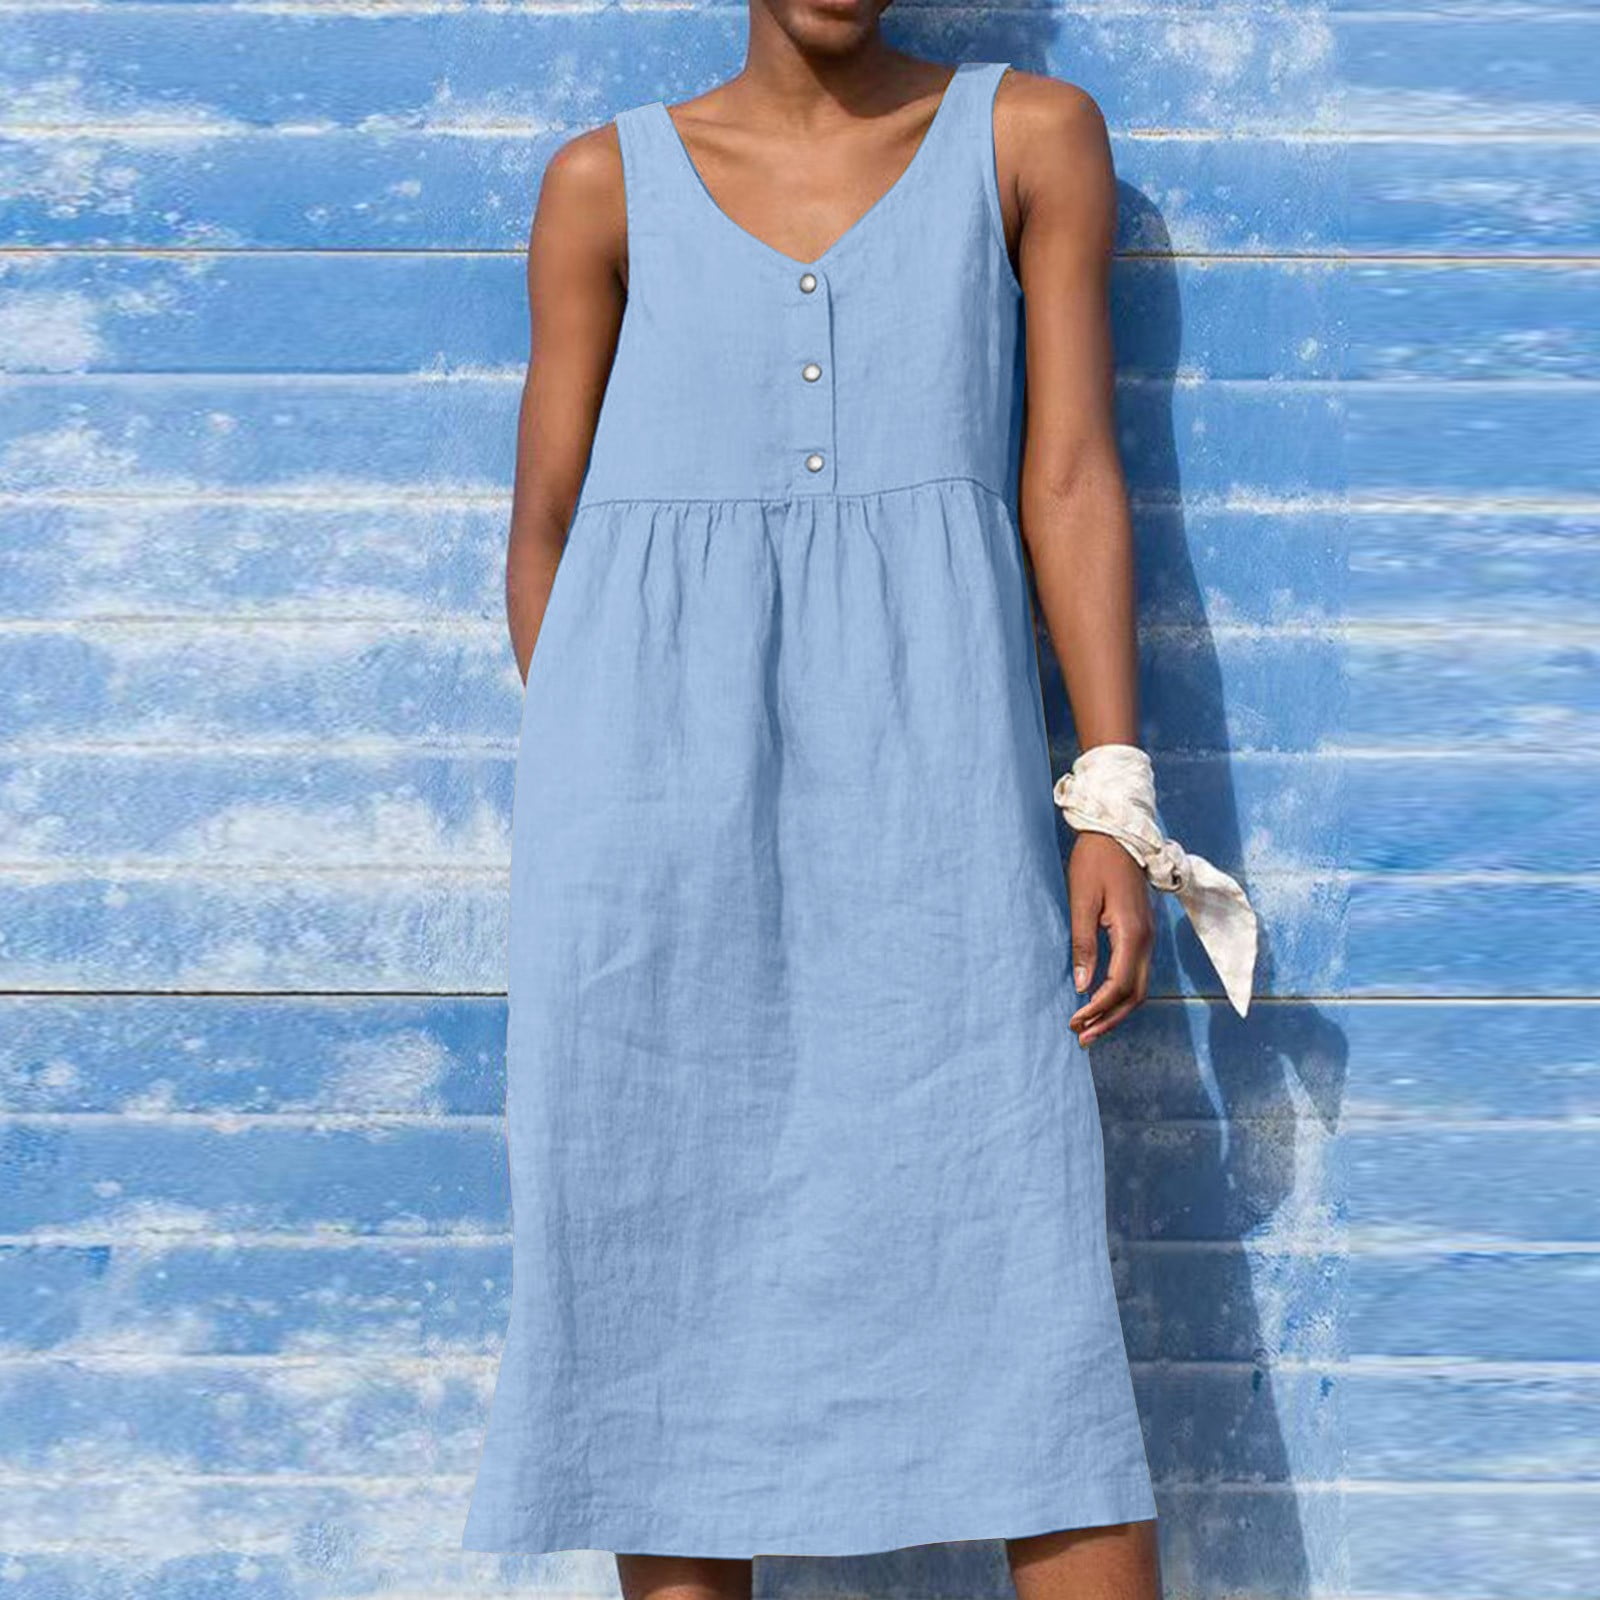 Yubatuo Women's Fashion Beach Casual Floral Maxi Long Dress For Women  Summer V Neck Long Sleeve Dress(Light Blue,L) 